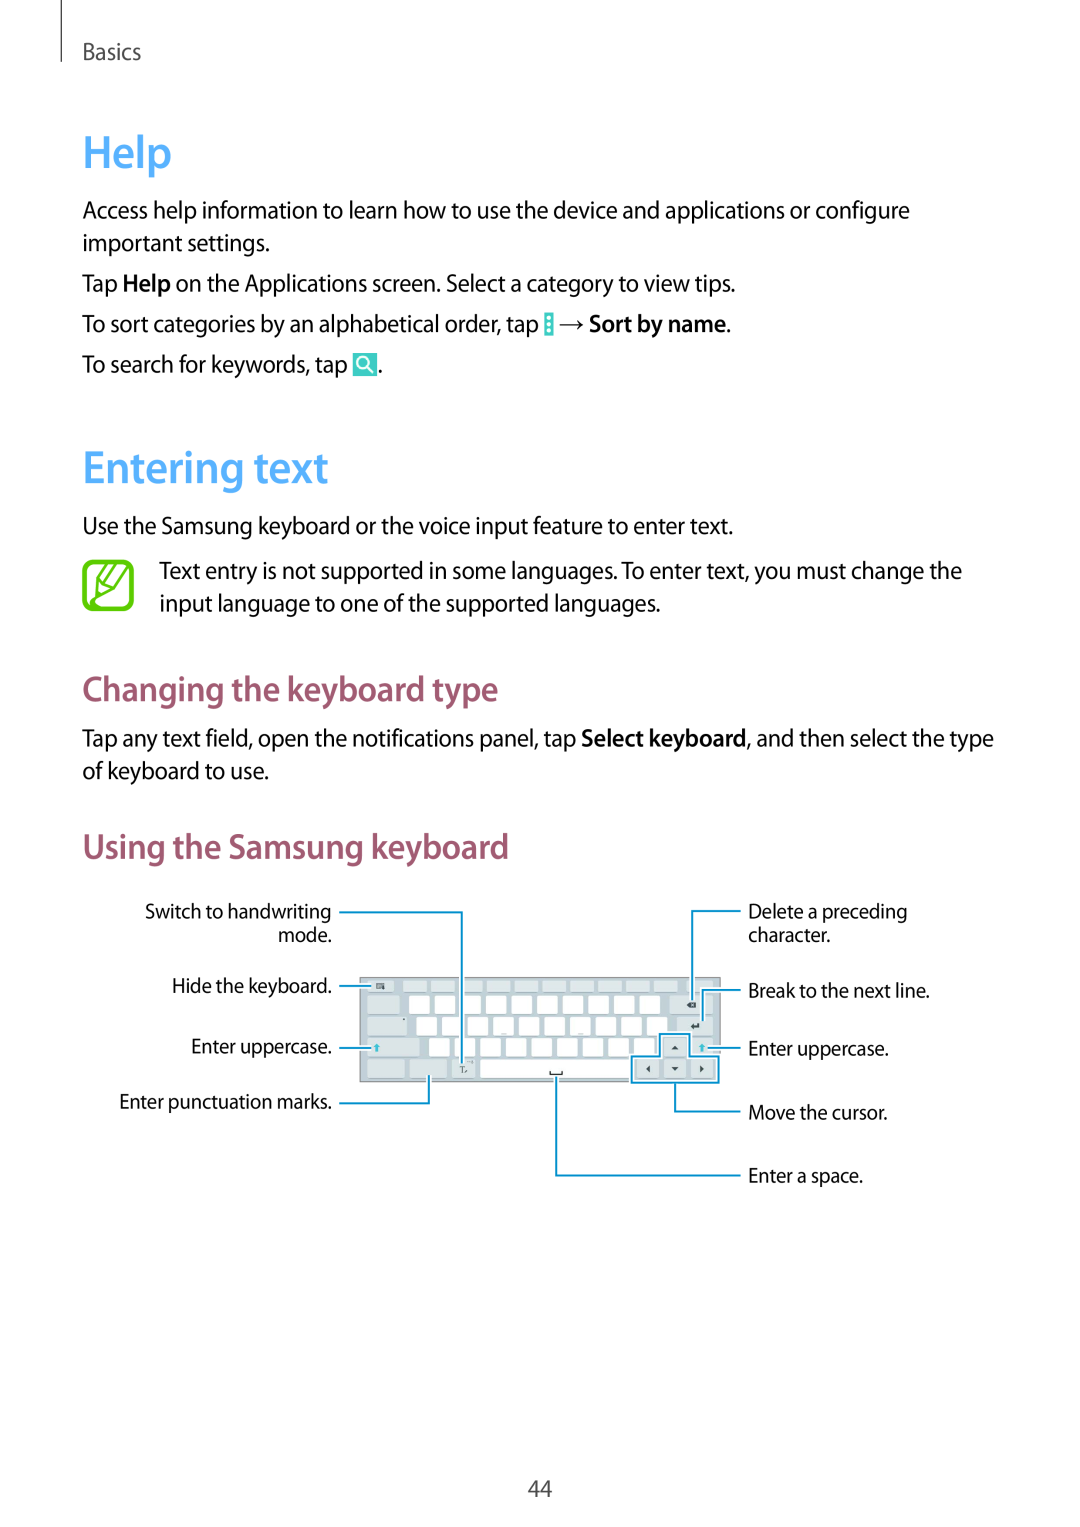 Samsung SM-P9000ZKYEUR, SM-P9000ZWAATO Help, Entering text, Changing the keyboard type, Using the Samsung keyboard, Basics 